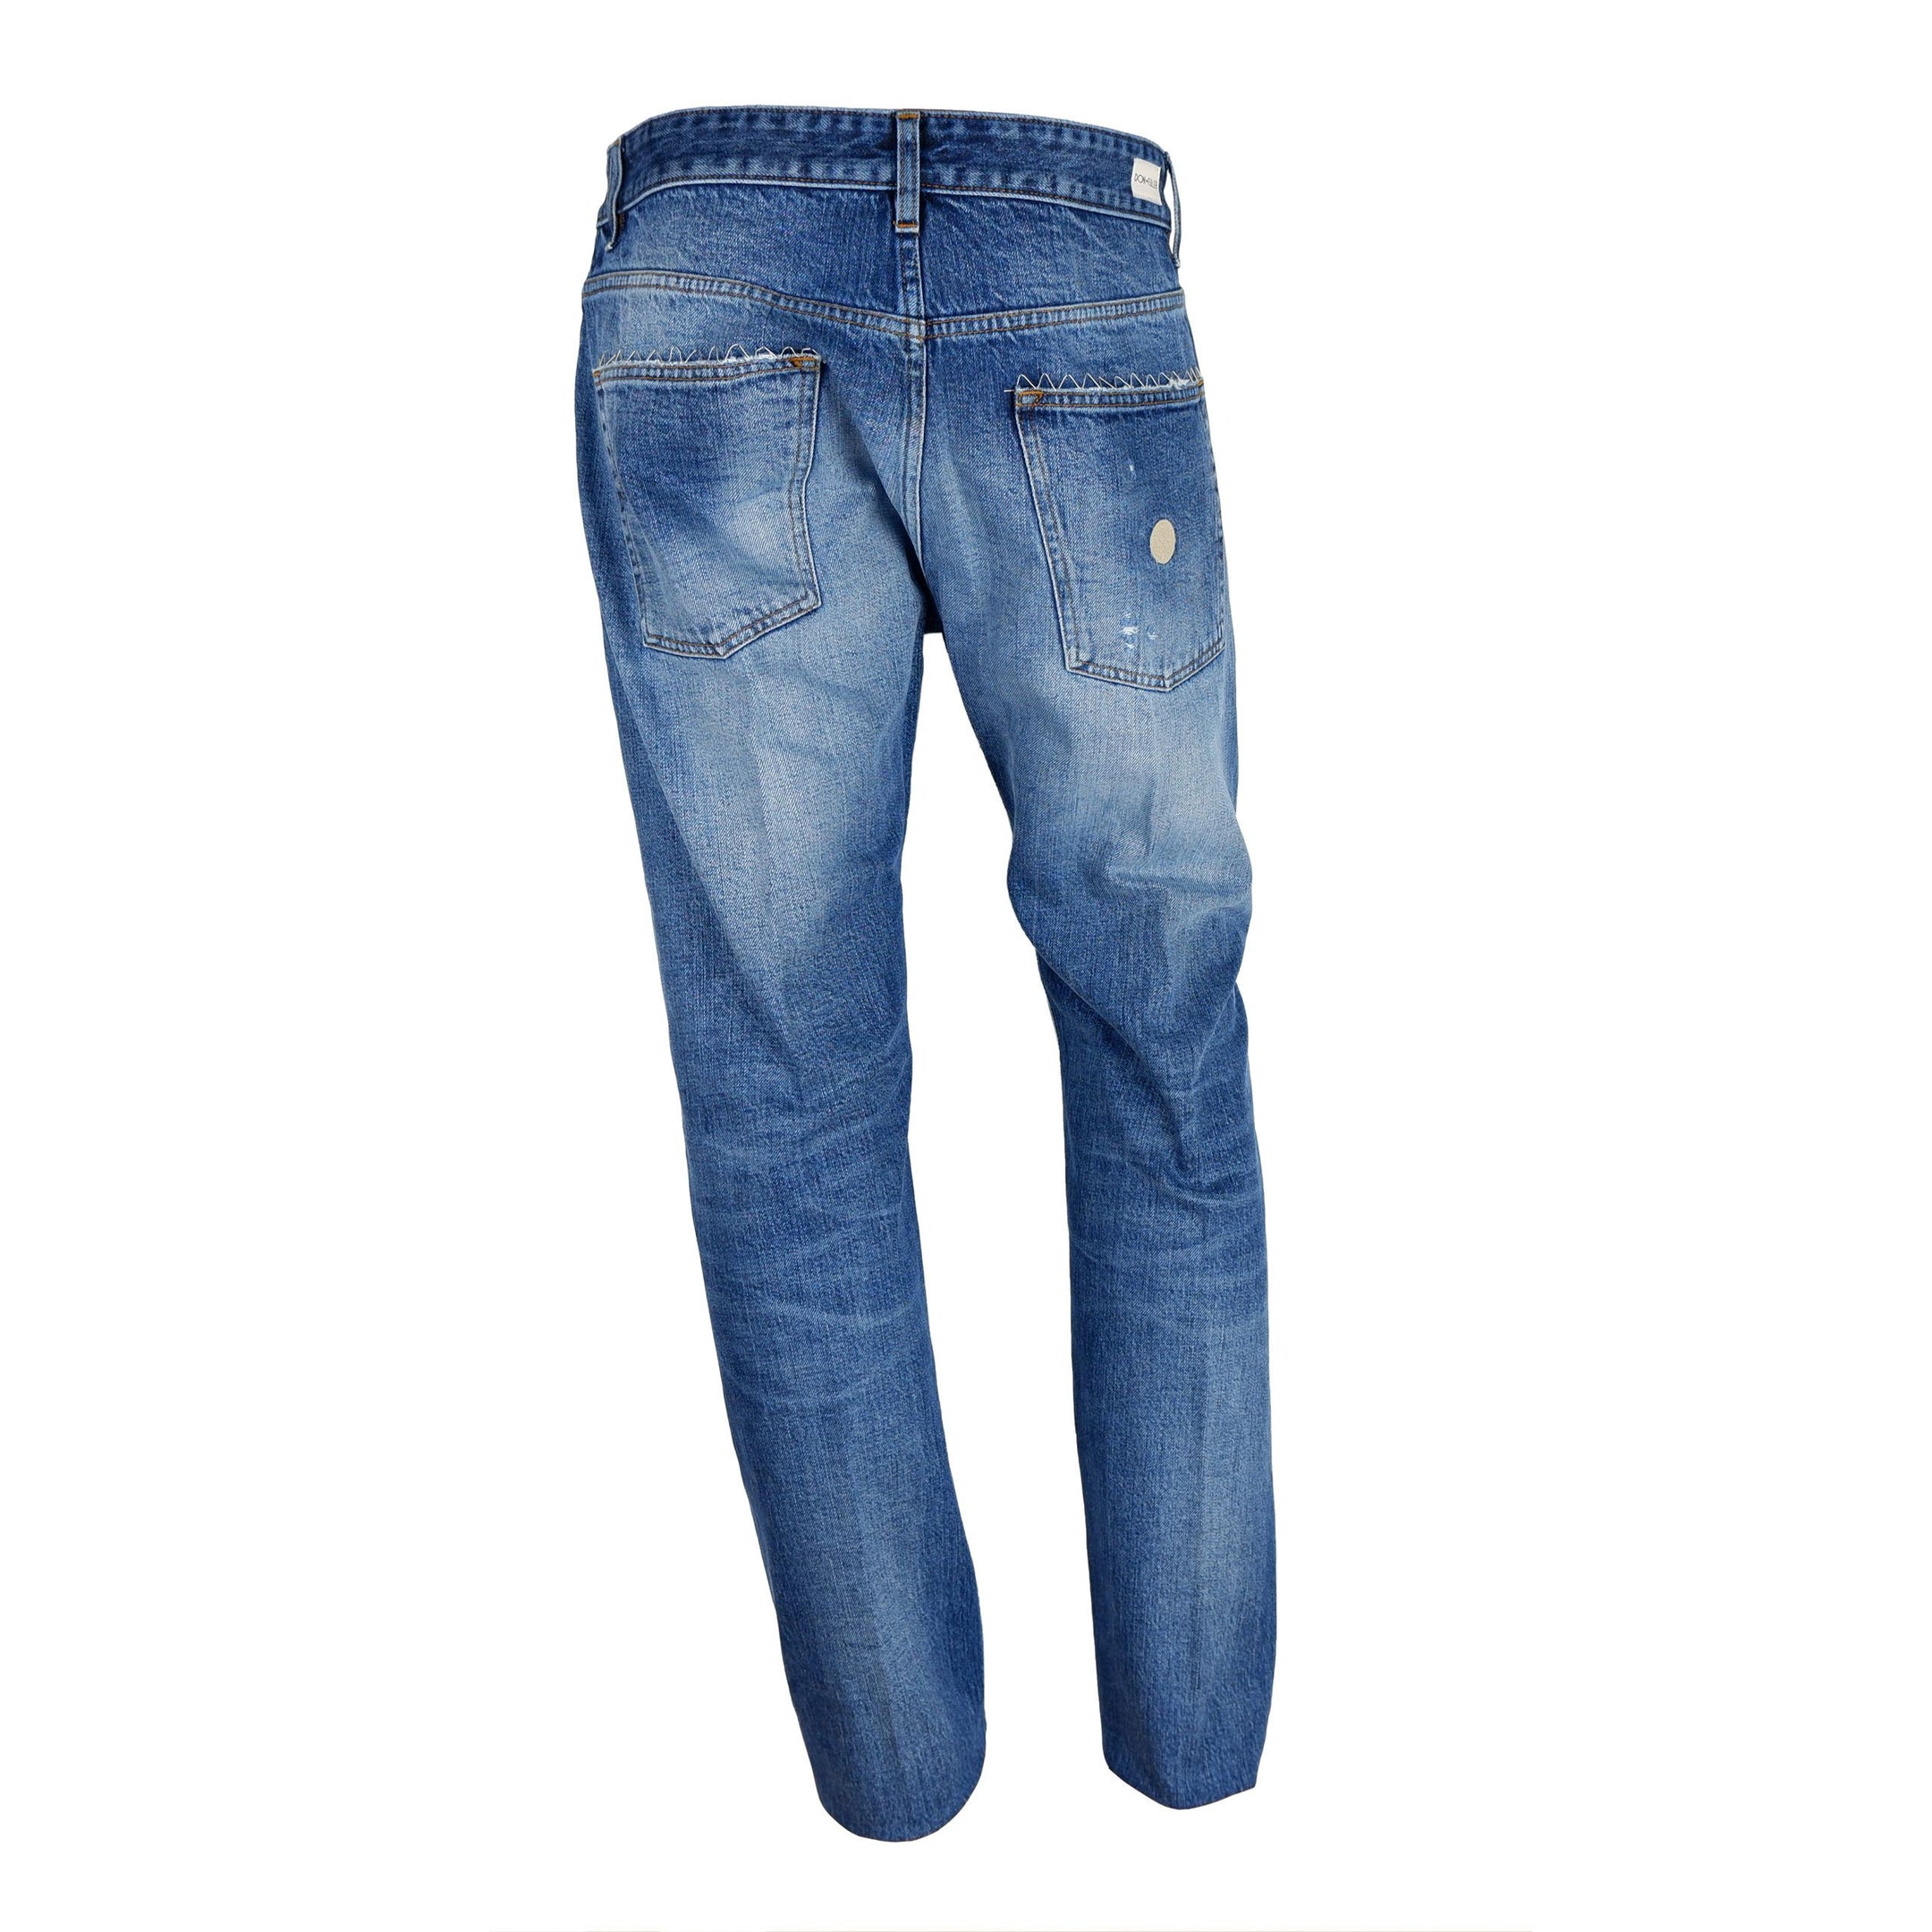 Chic Medium Wash Men's Cotton Jeans